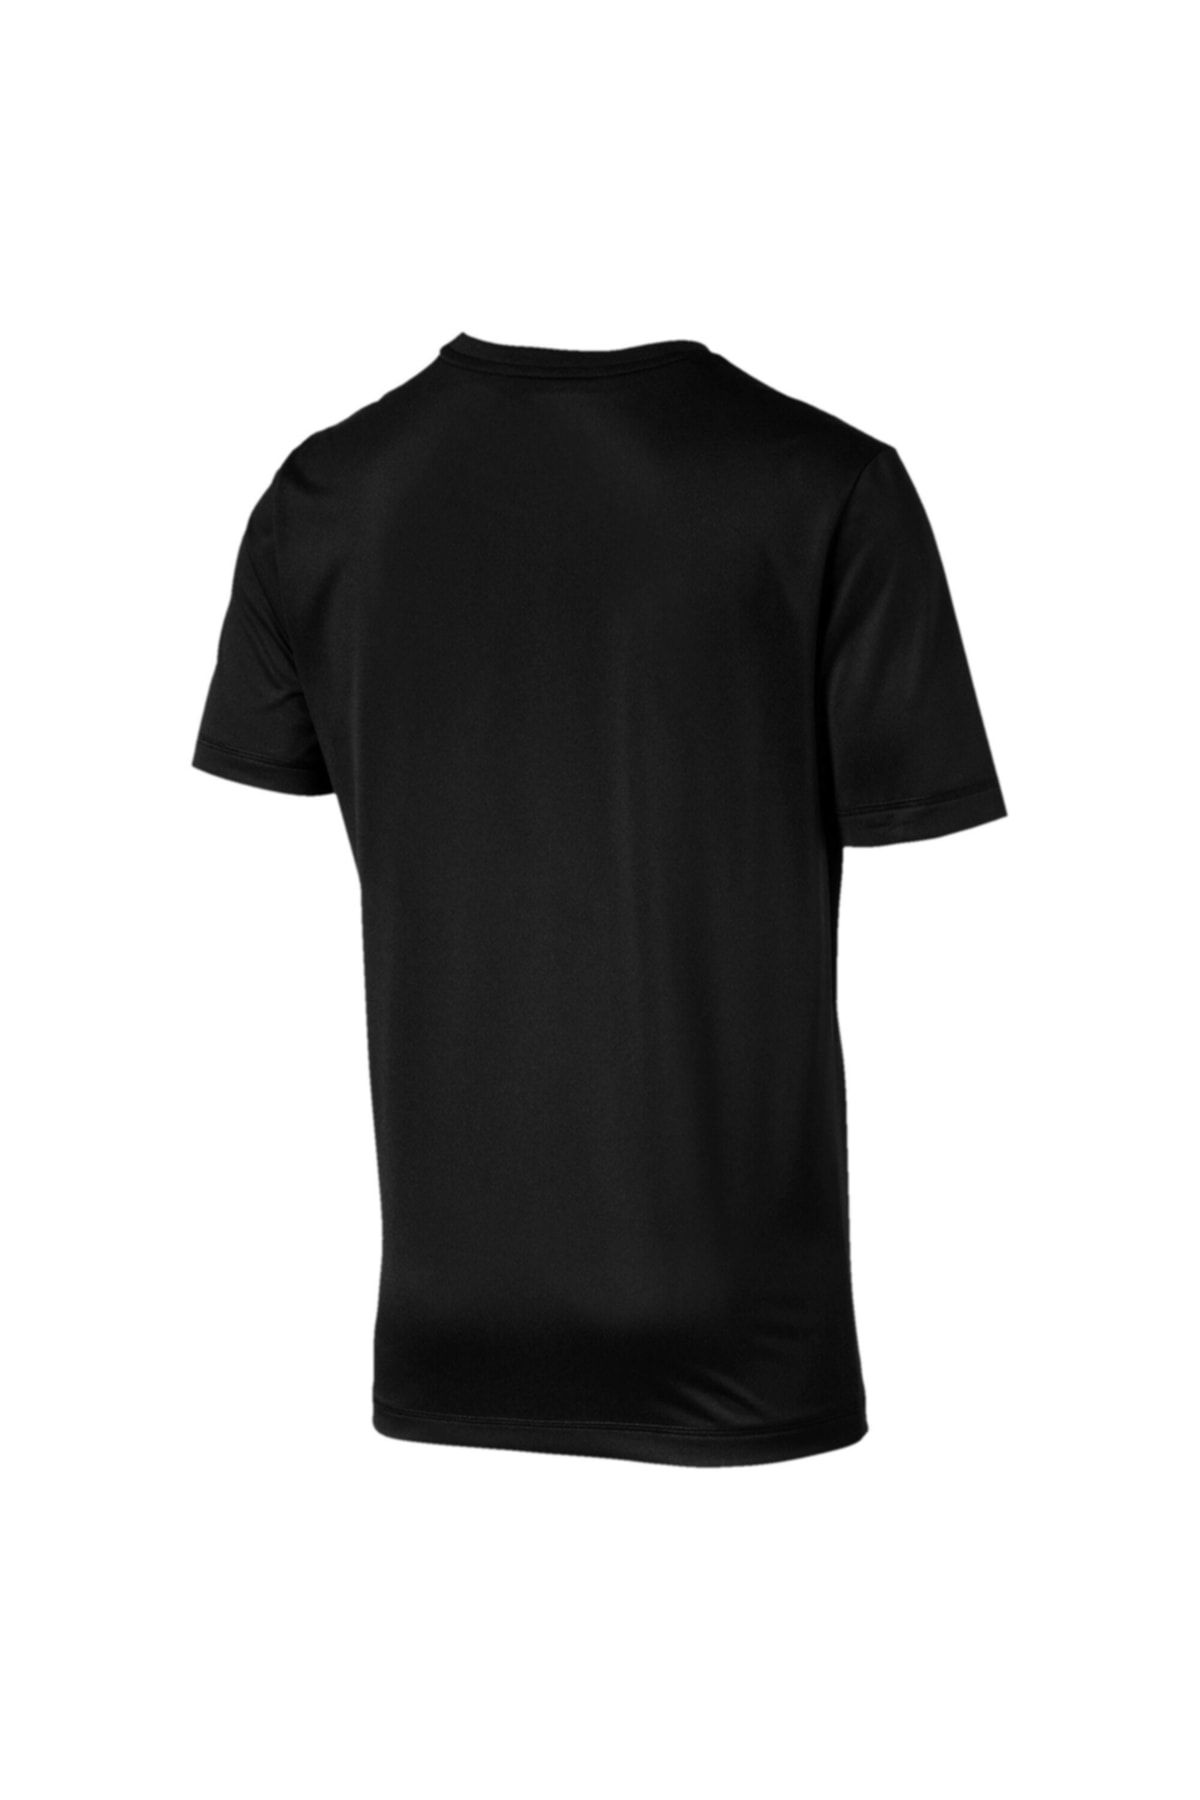 Puma Erkek T-shirt - Active Tee - 85170201